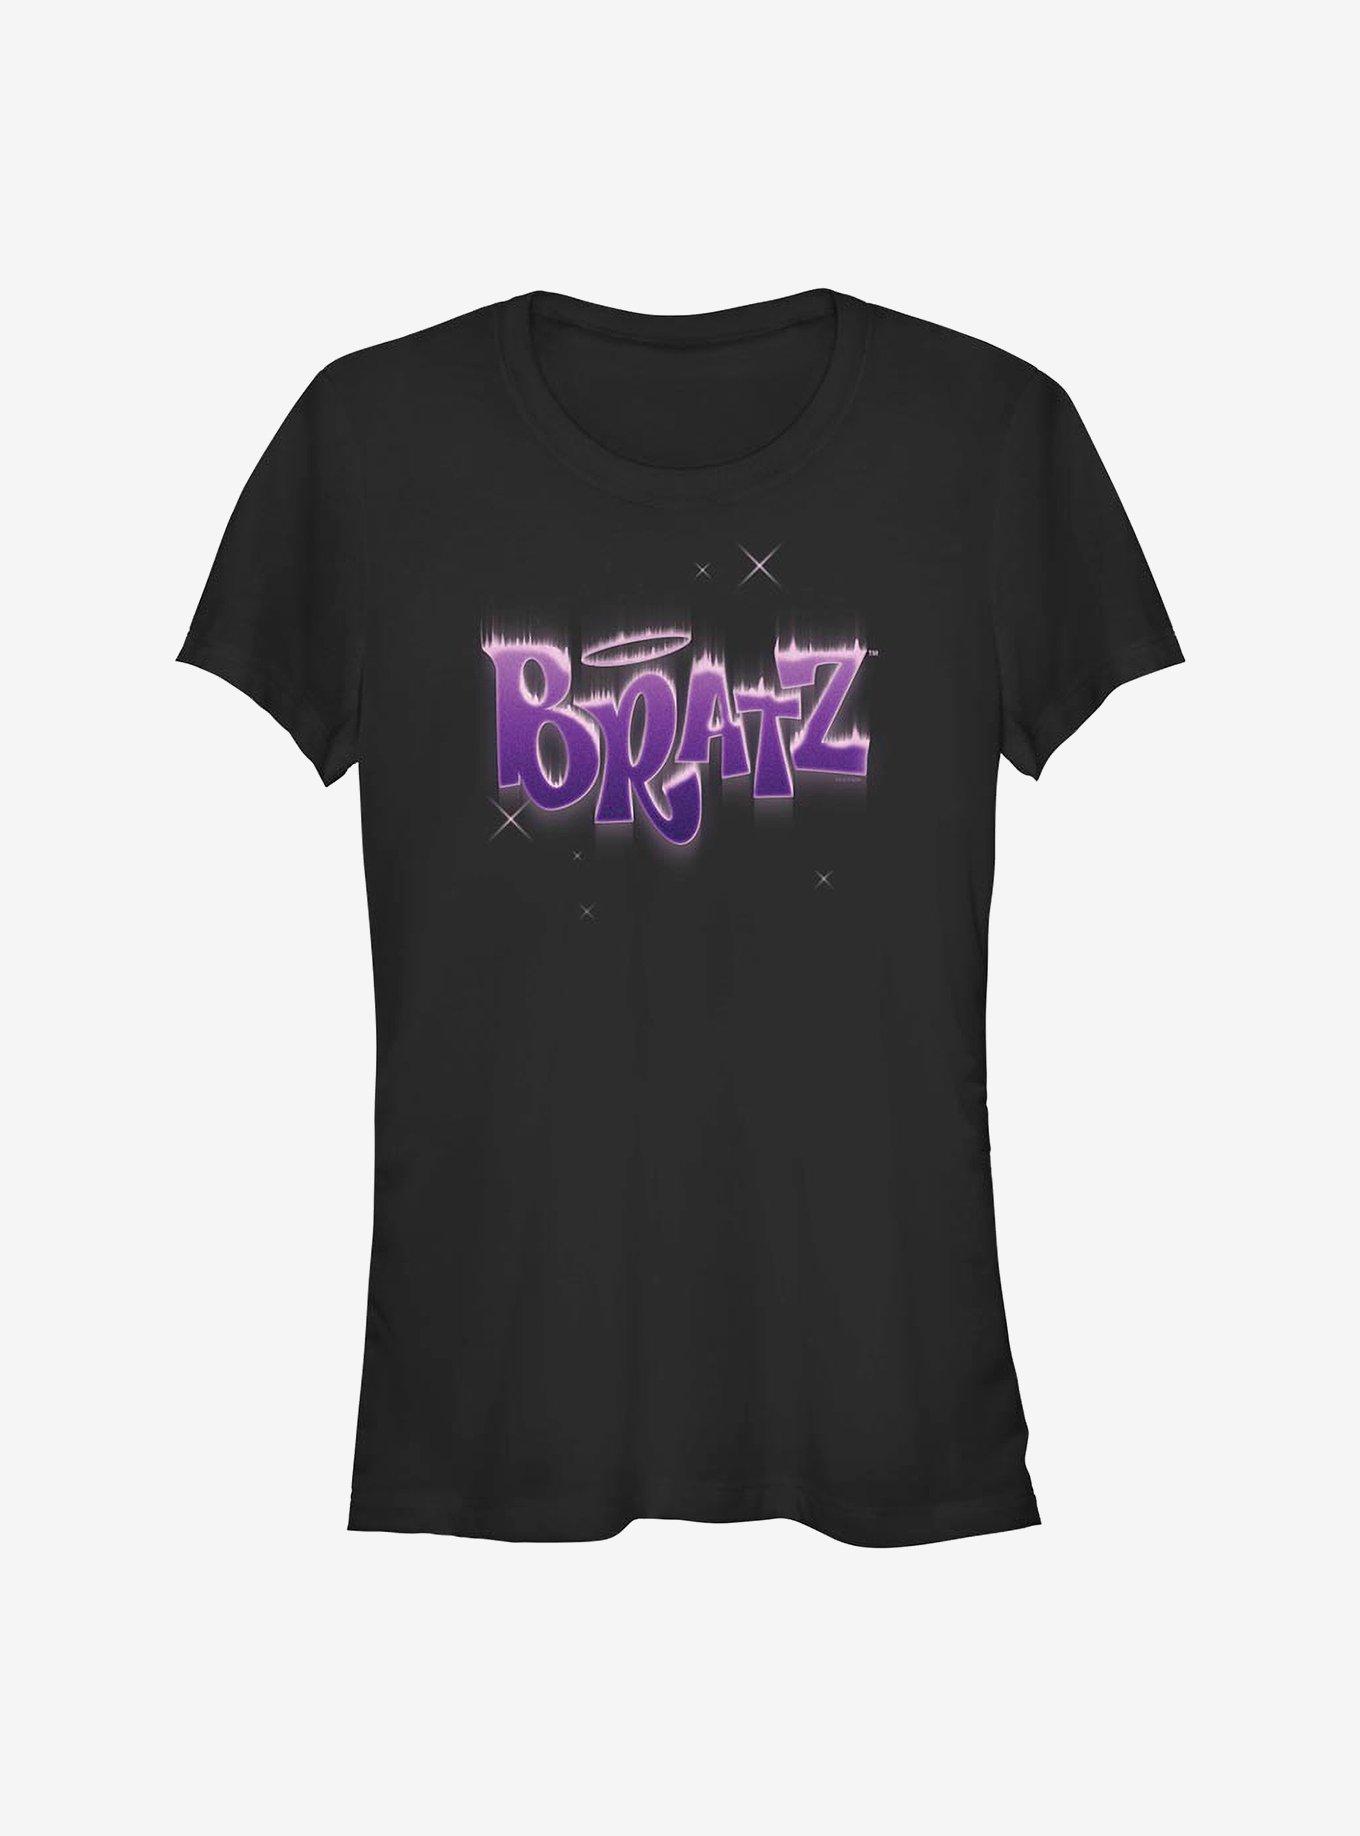 Bratz Purple Logo Girls T-Shirt